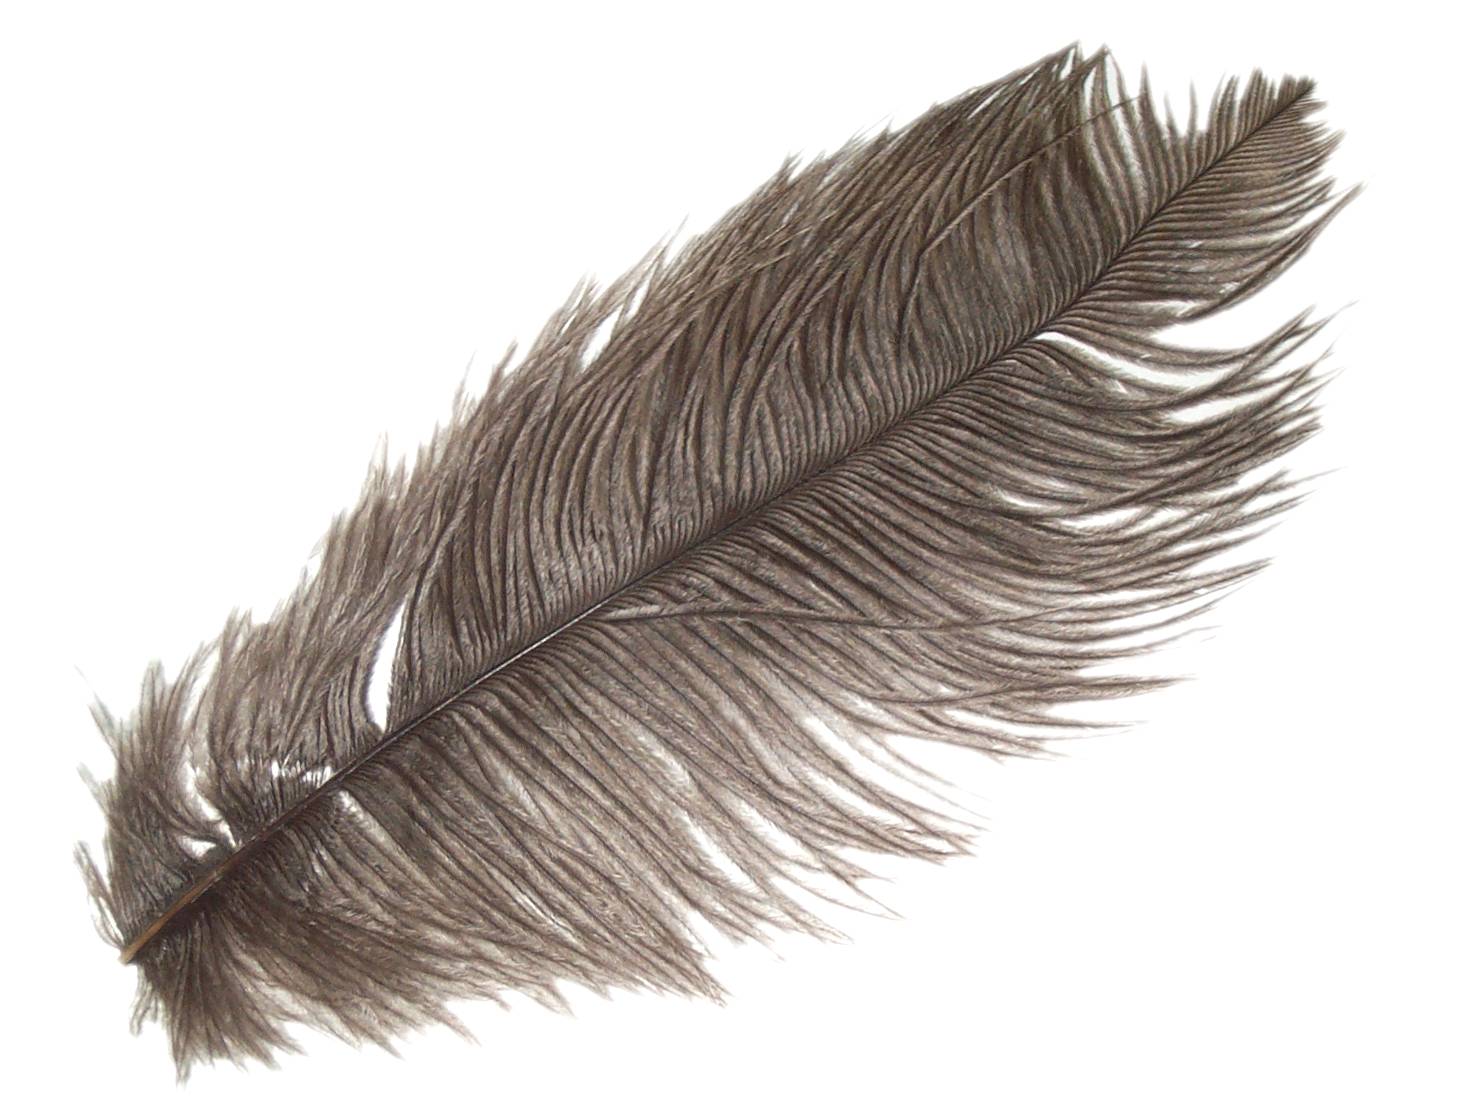 Feather.jpg